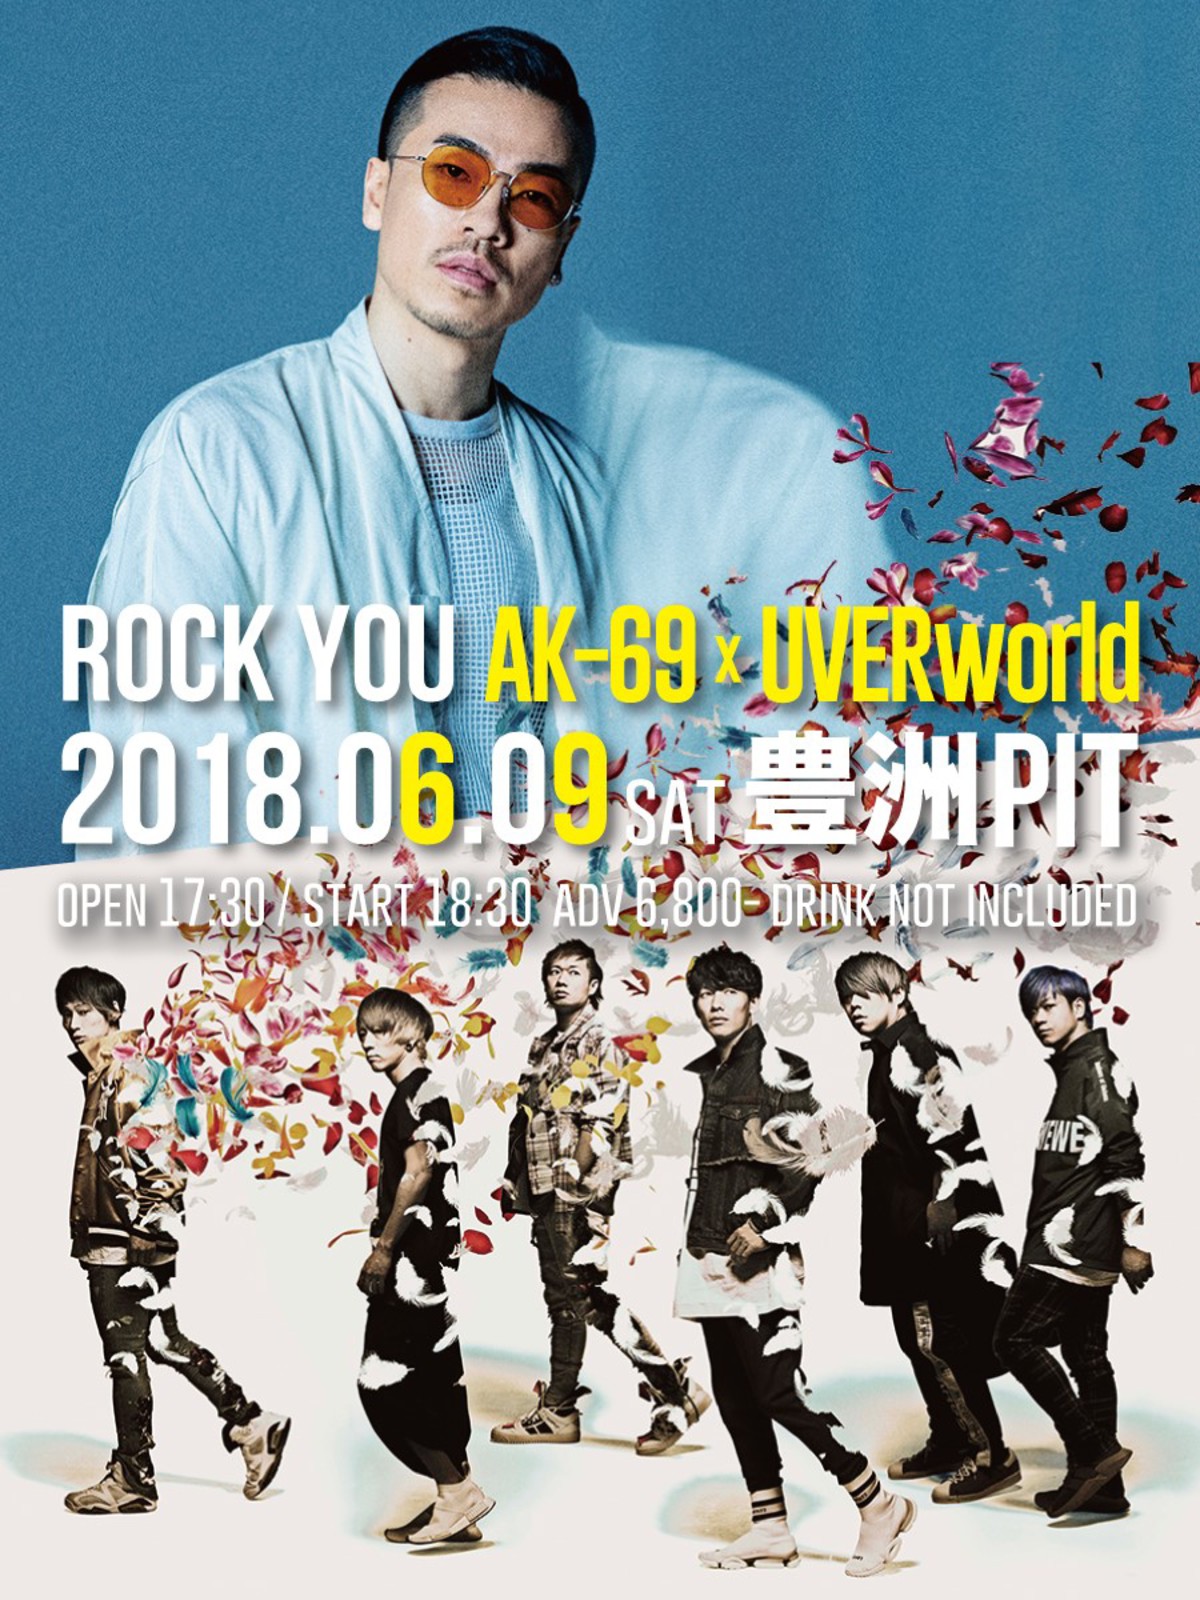 Uverworld Ak 69の6 9豊洲pit公演 Rock You に出演決定 激ロック ニュース